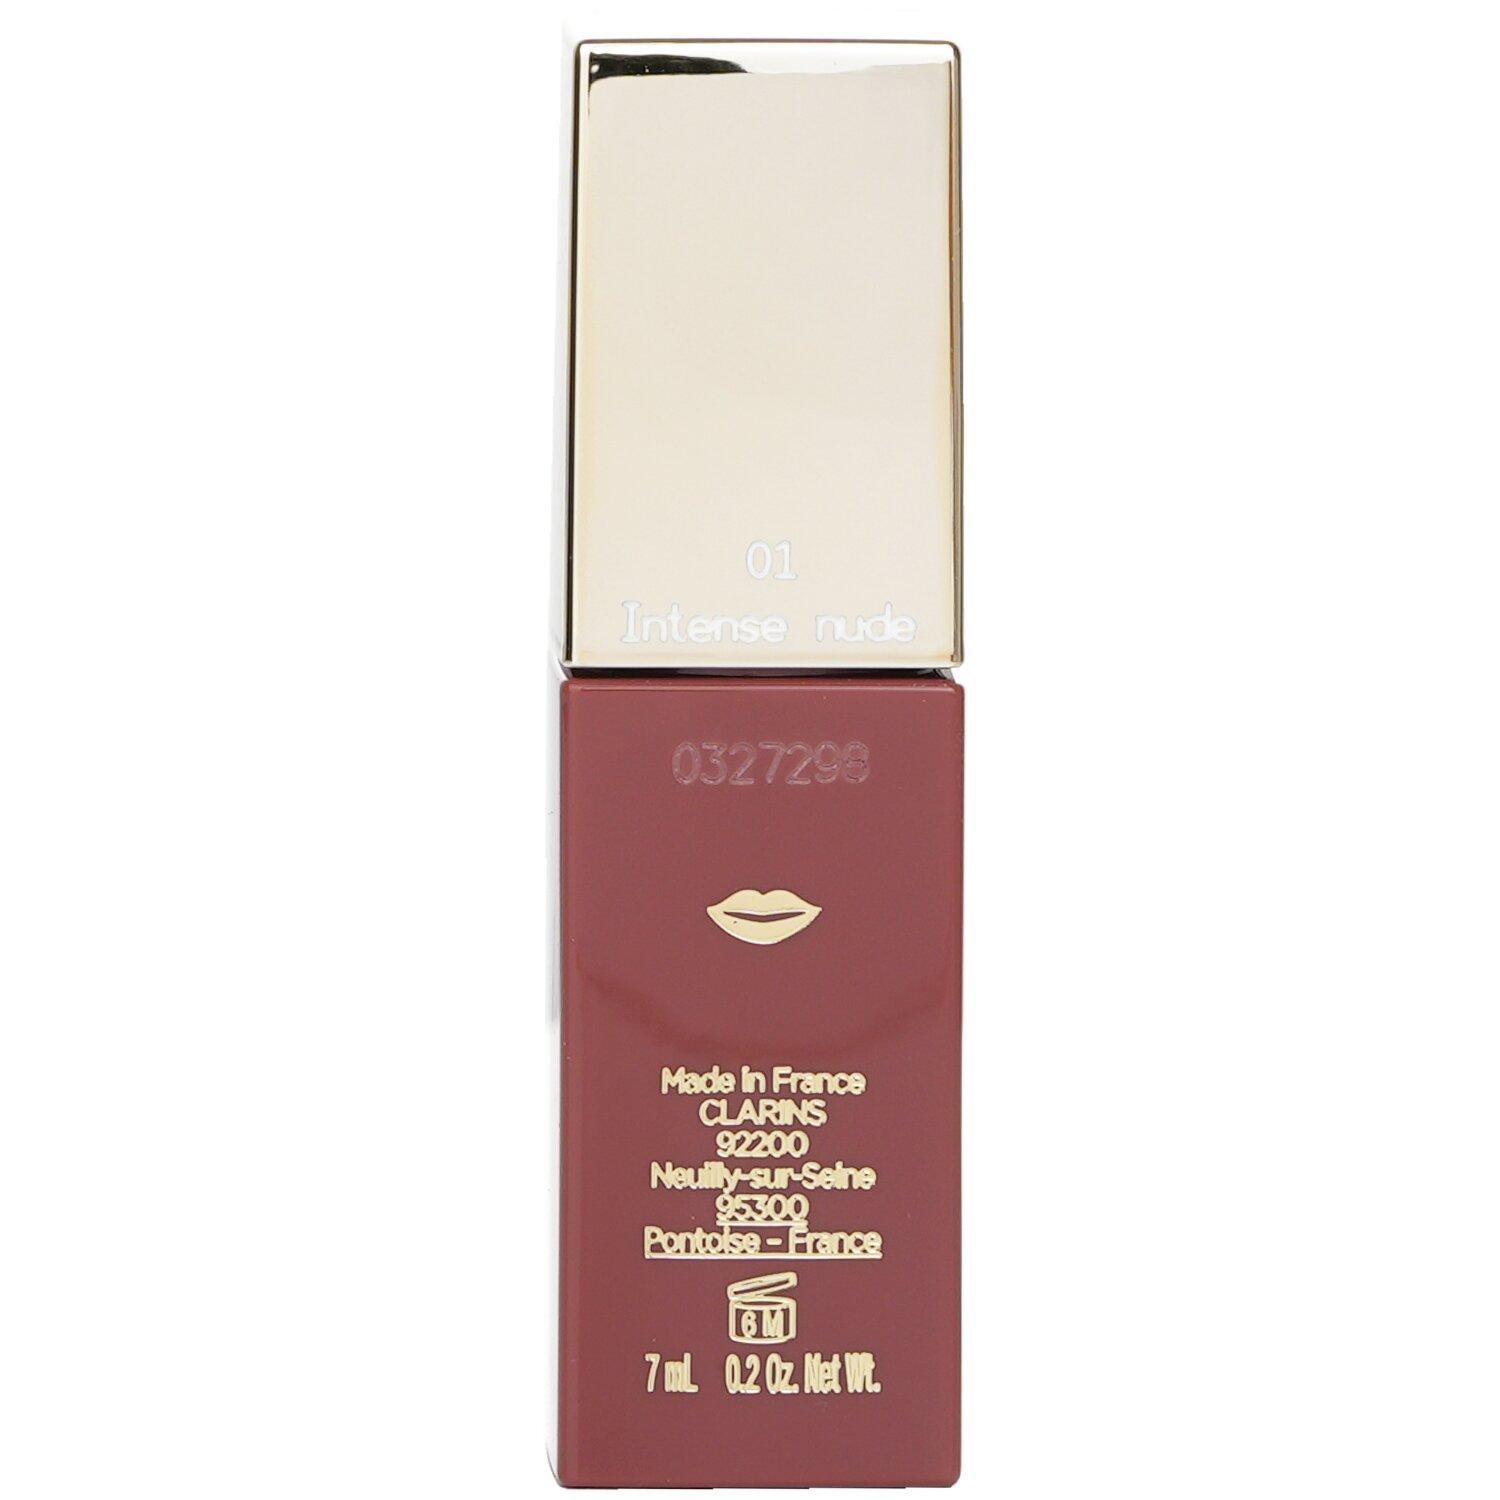 Clarins Lip Comfort Oil Intense 7ml/0.2oz